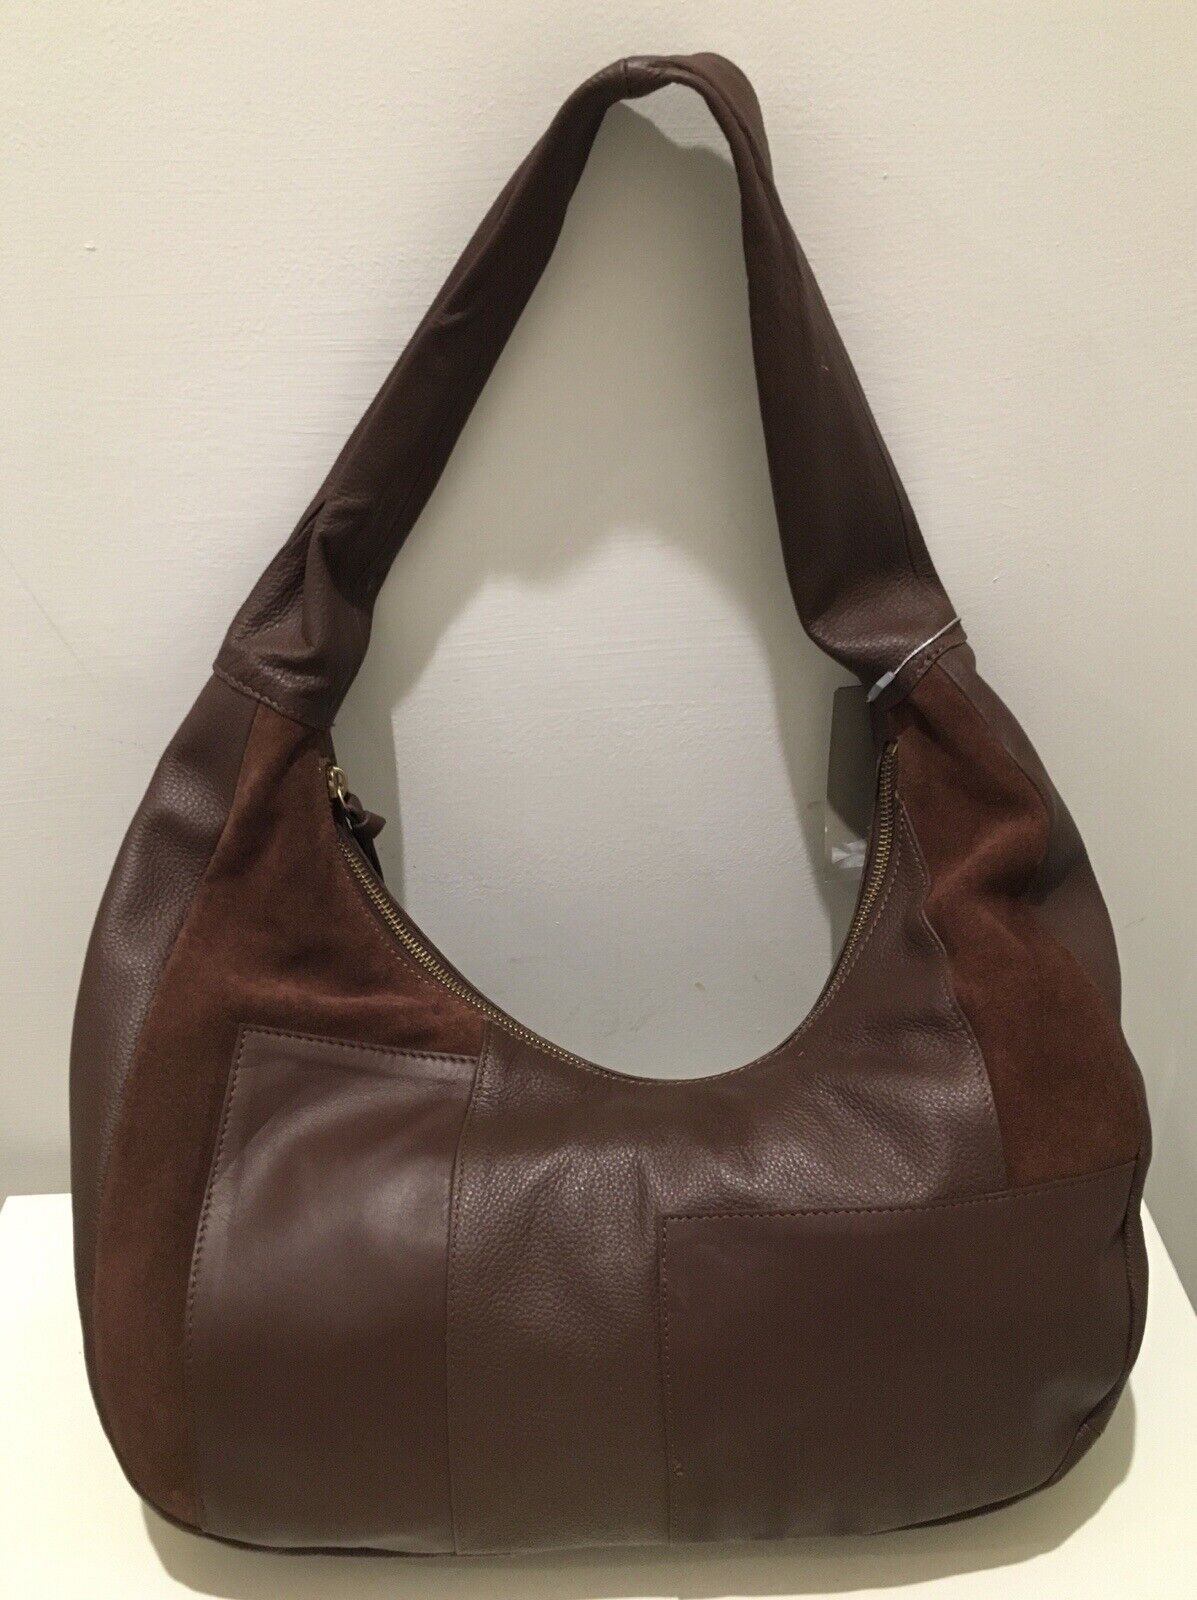 Crown Vintage genuine leather hobo bag. | eBay